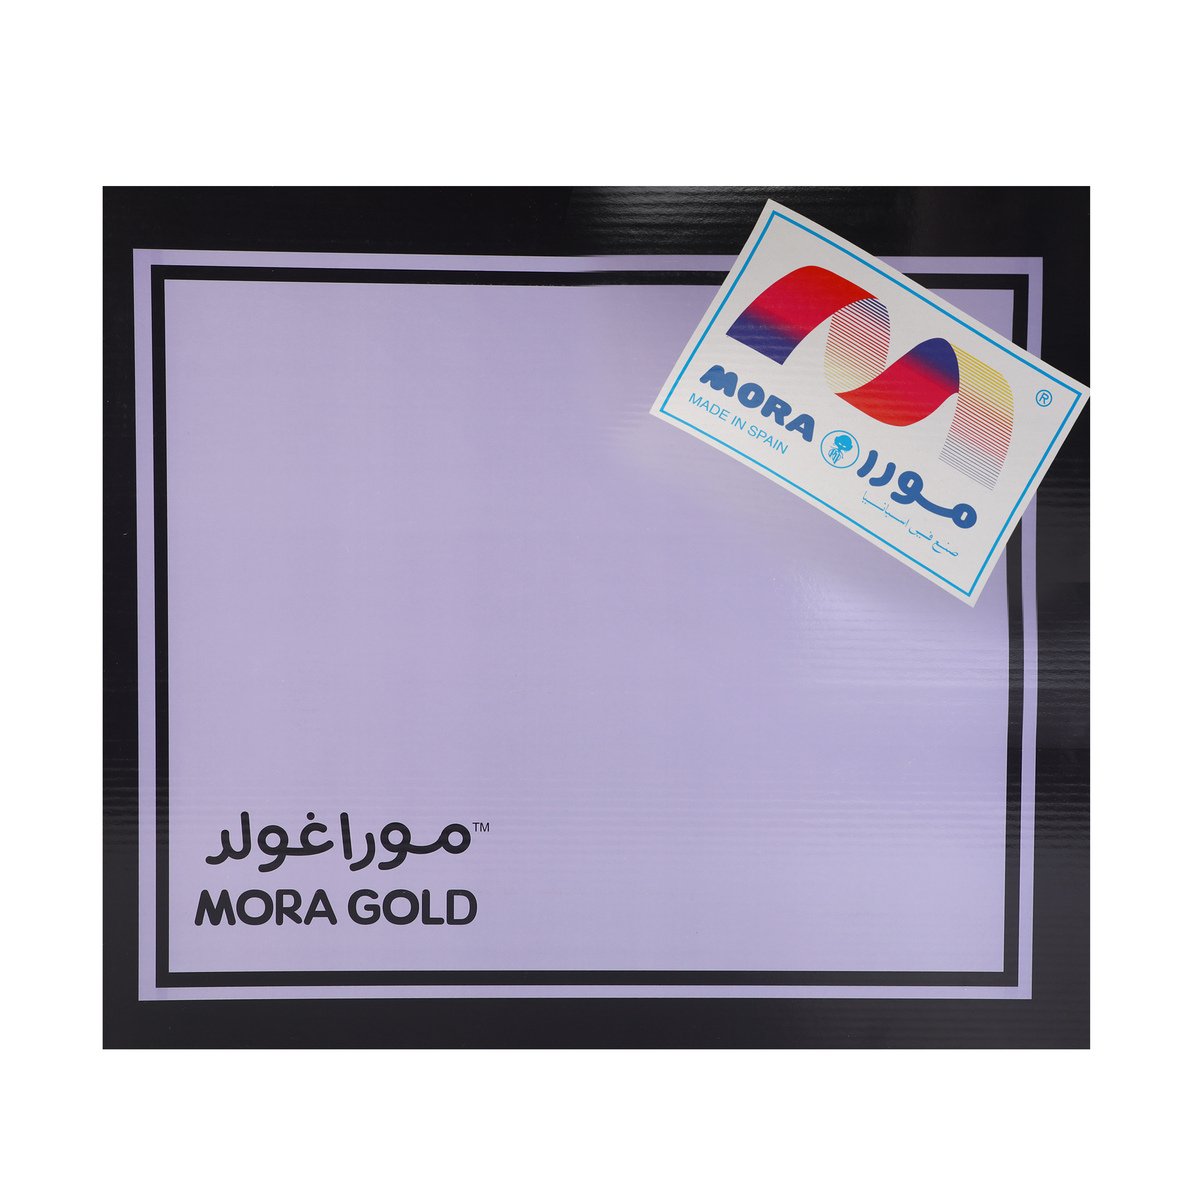 Mora Gold Blanket 220 X240cm Assorted Colors & Designs